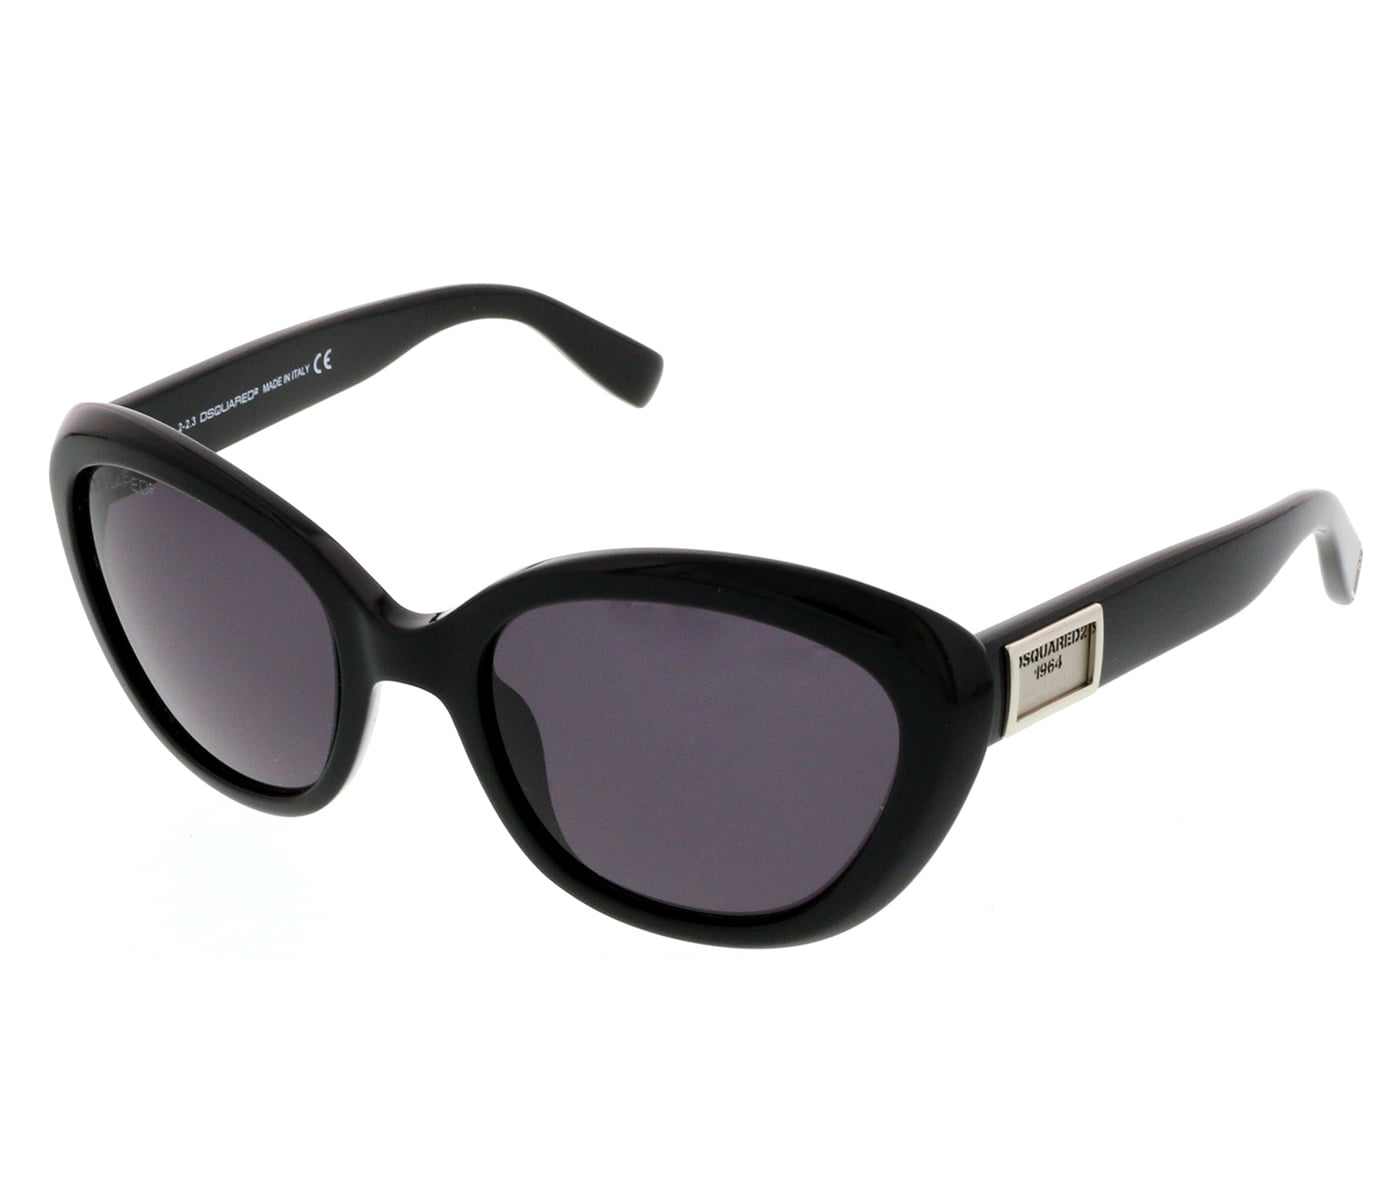 dsquared cateye sunglasses